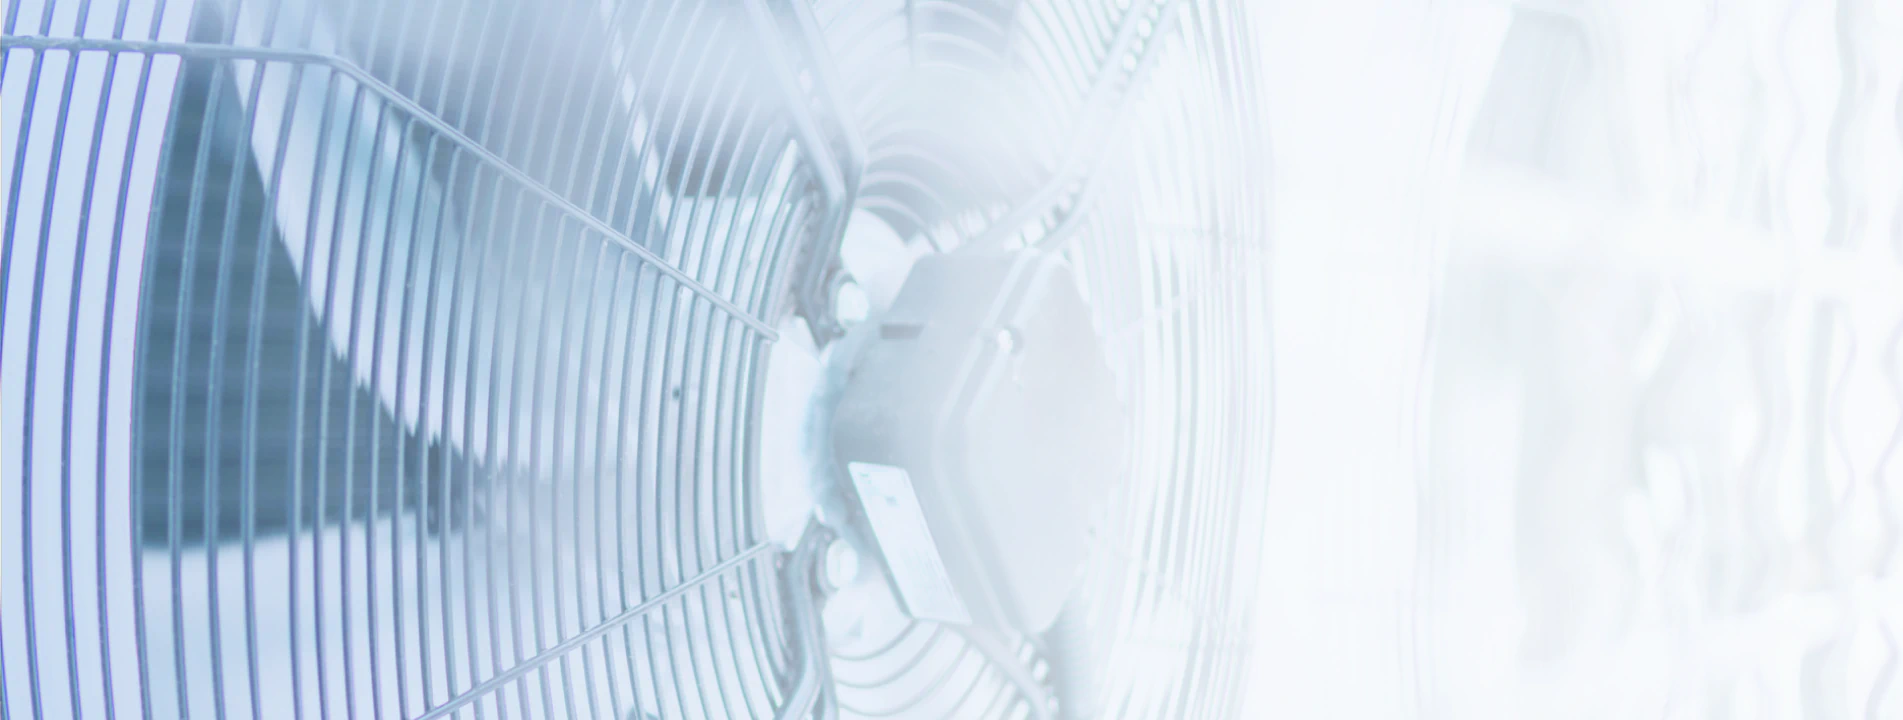 hvac heating ventilation fan